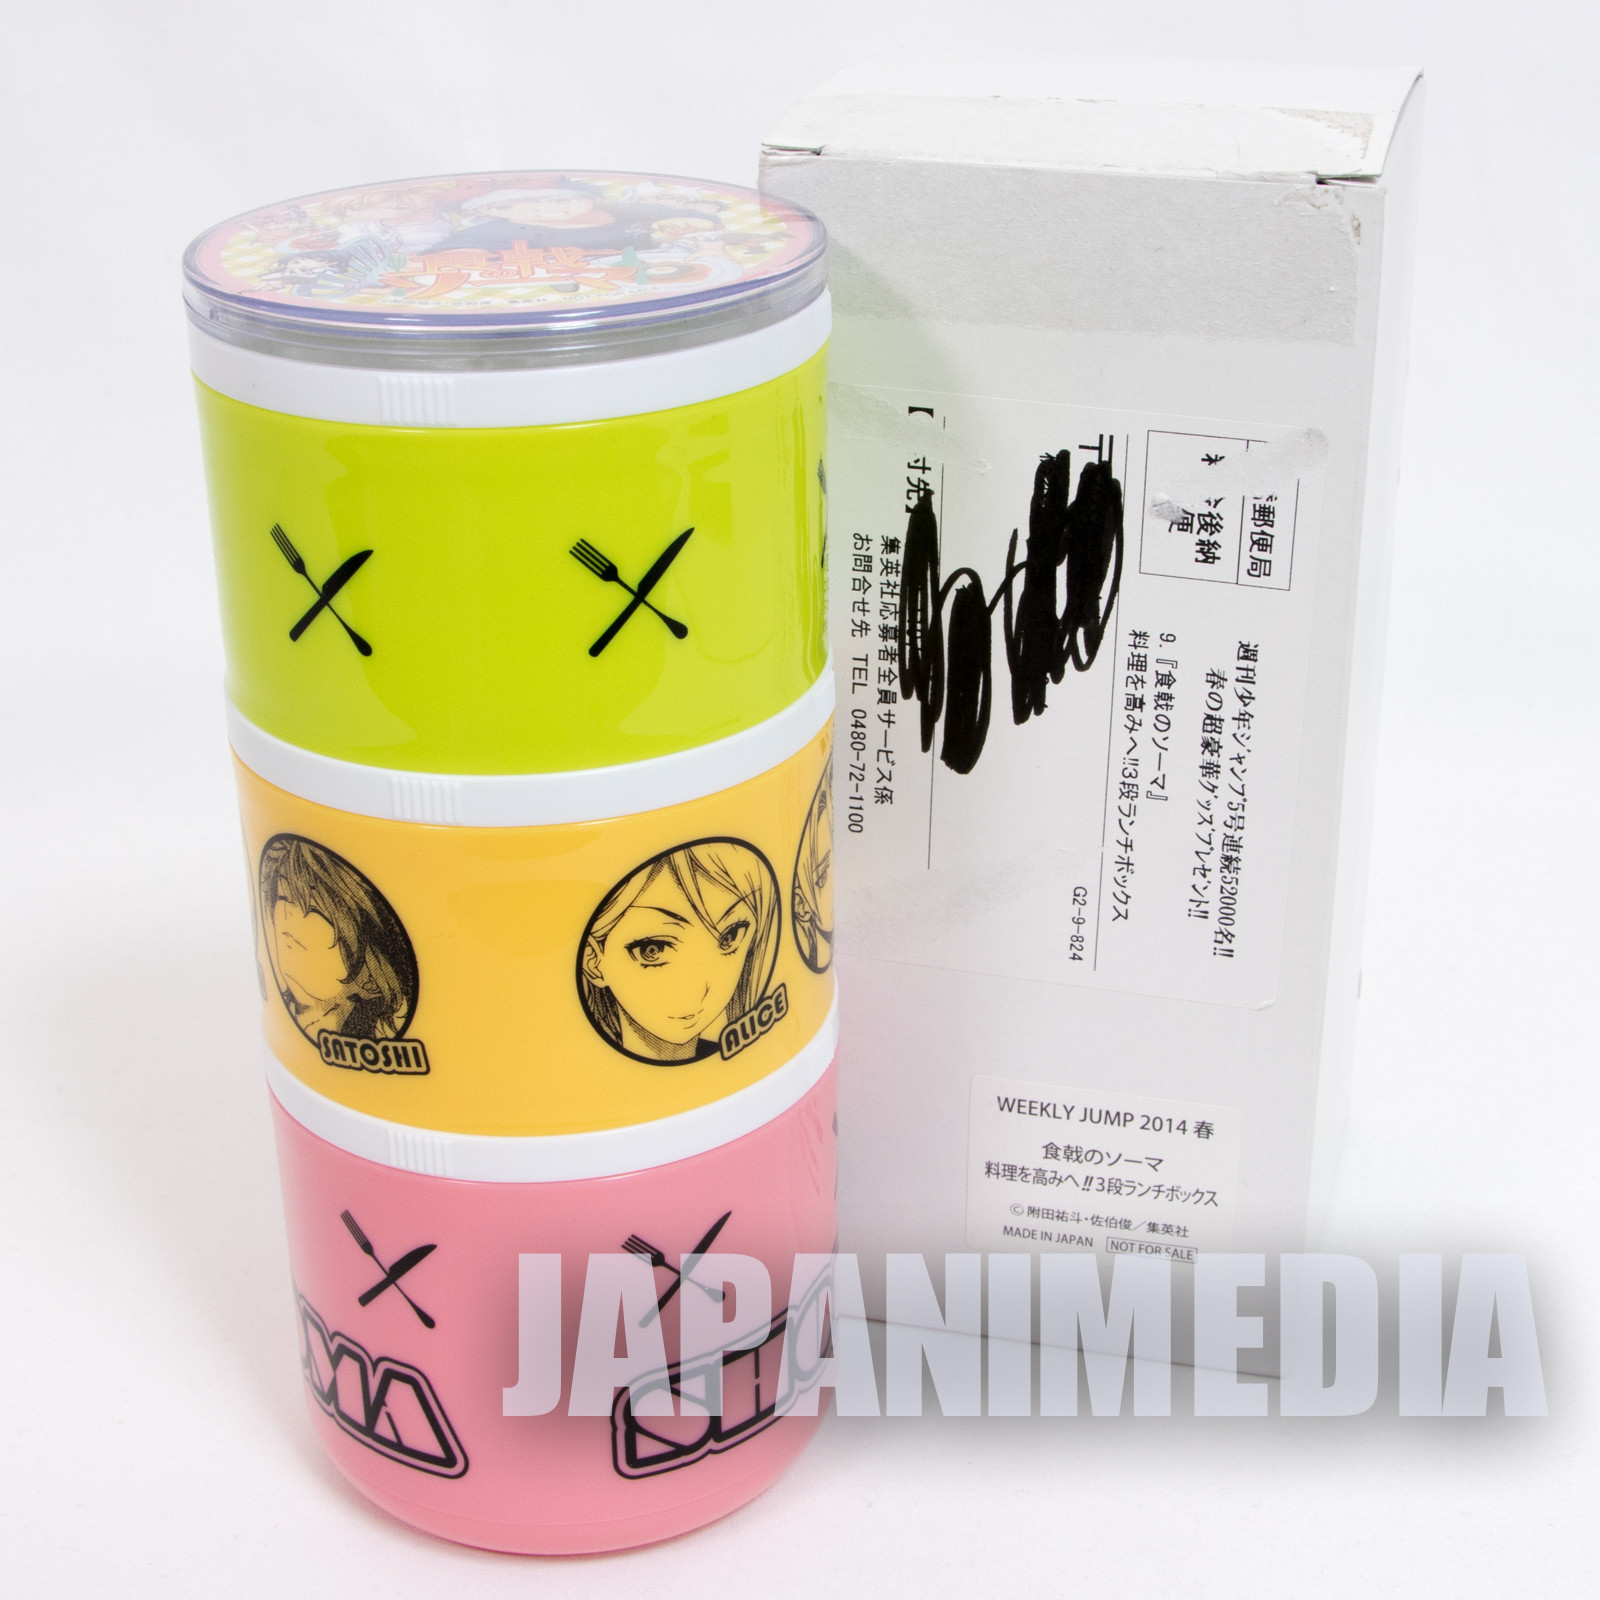 Food Wars! Shokugeki no Soma Three-stage Lunch Box SHONEN JUMP 2014 JAPAN ANIME